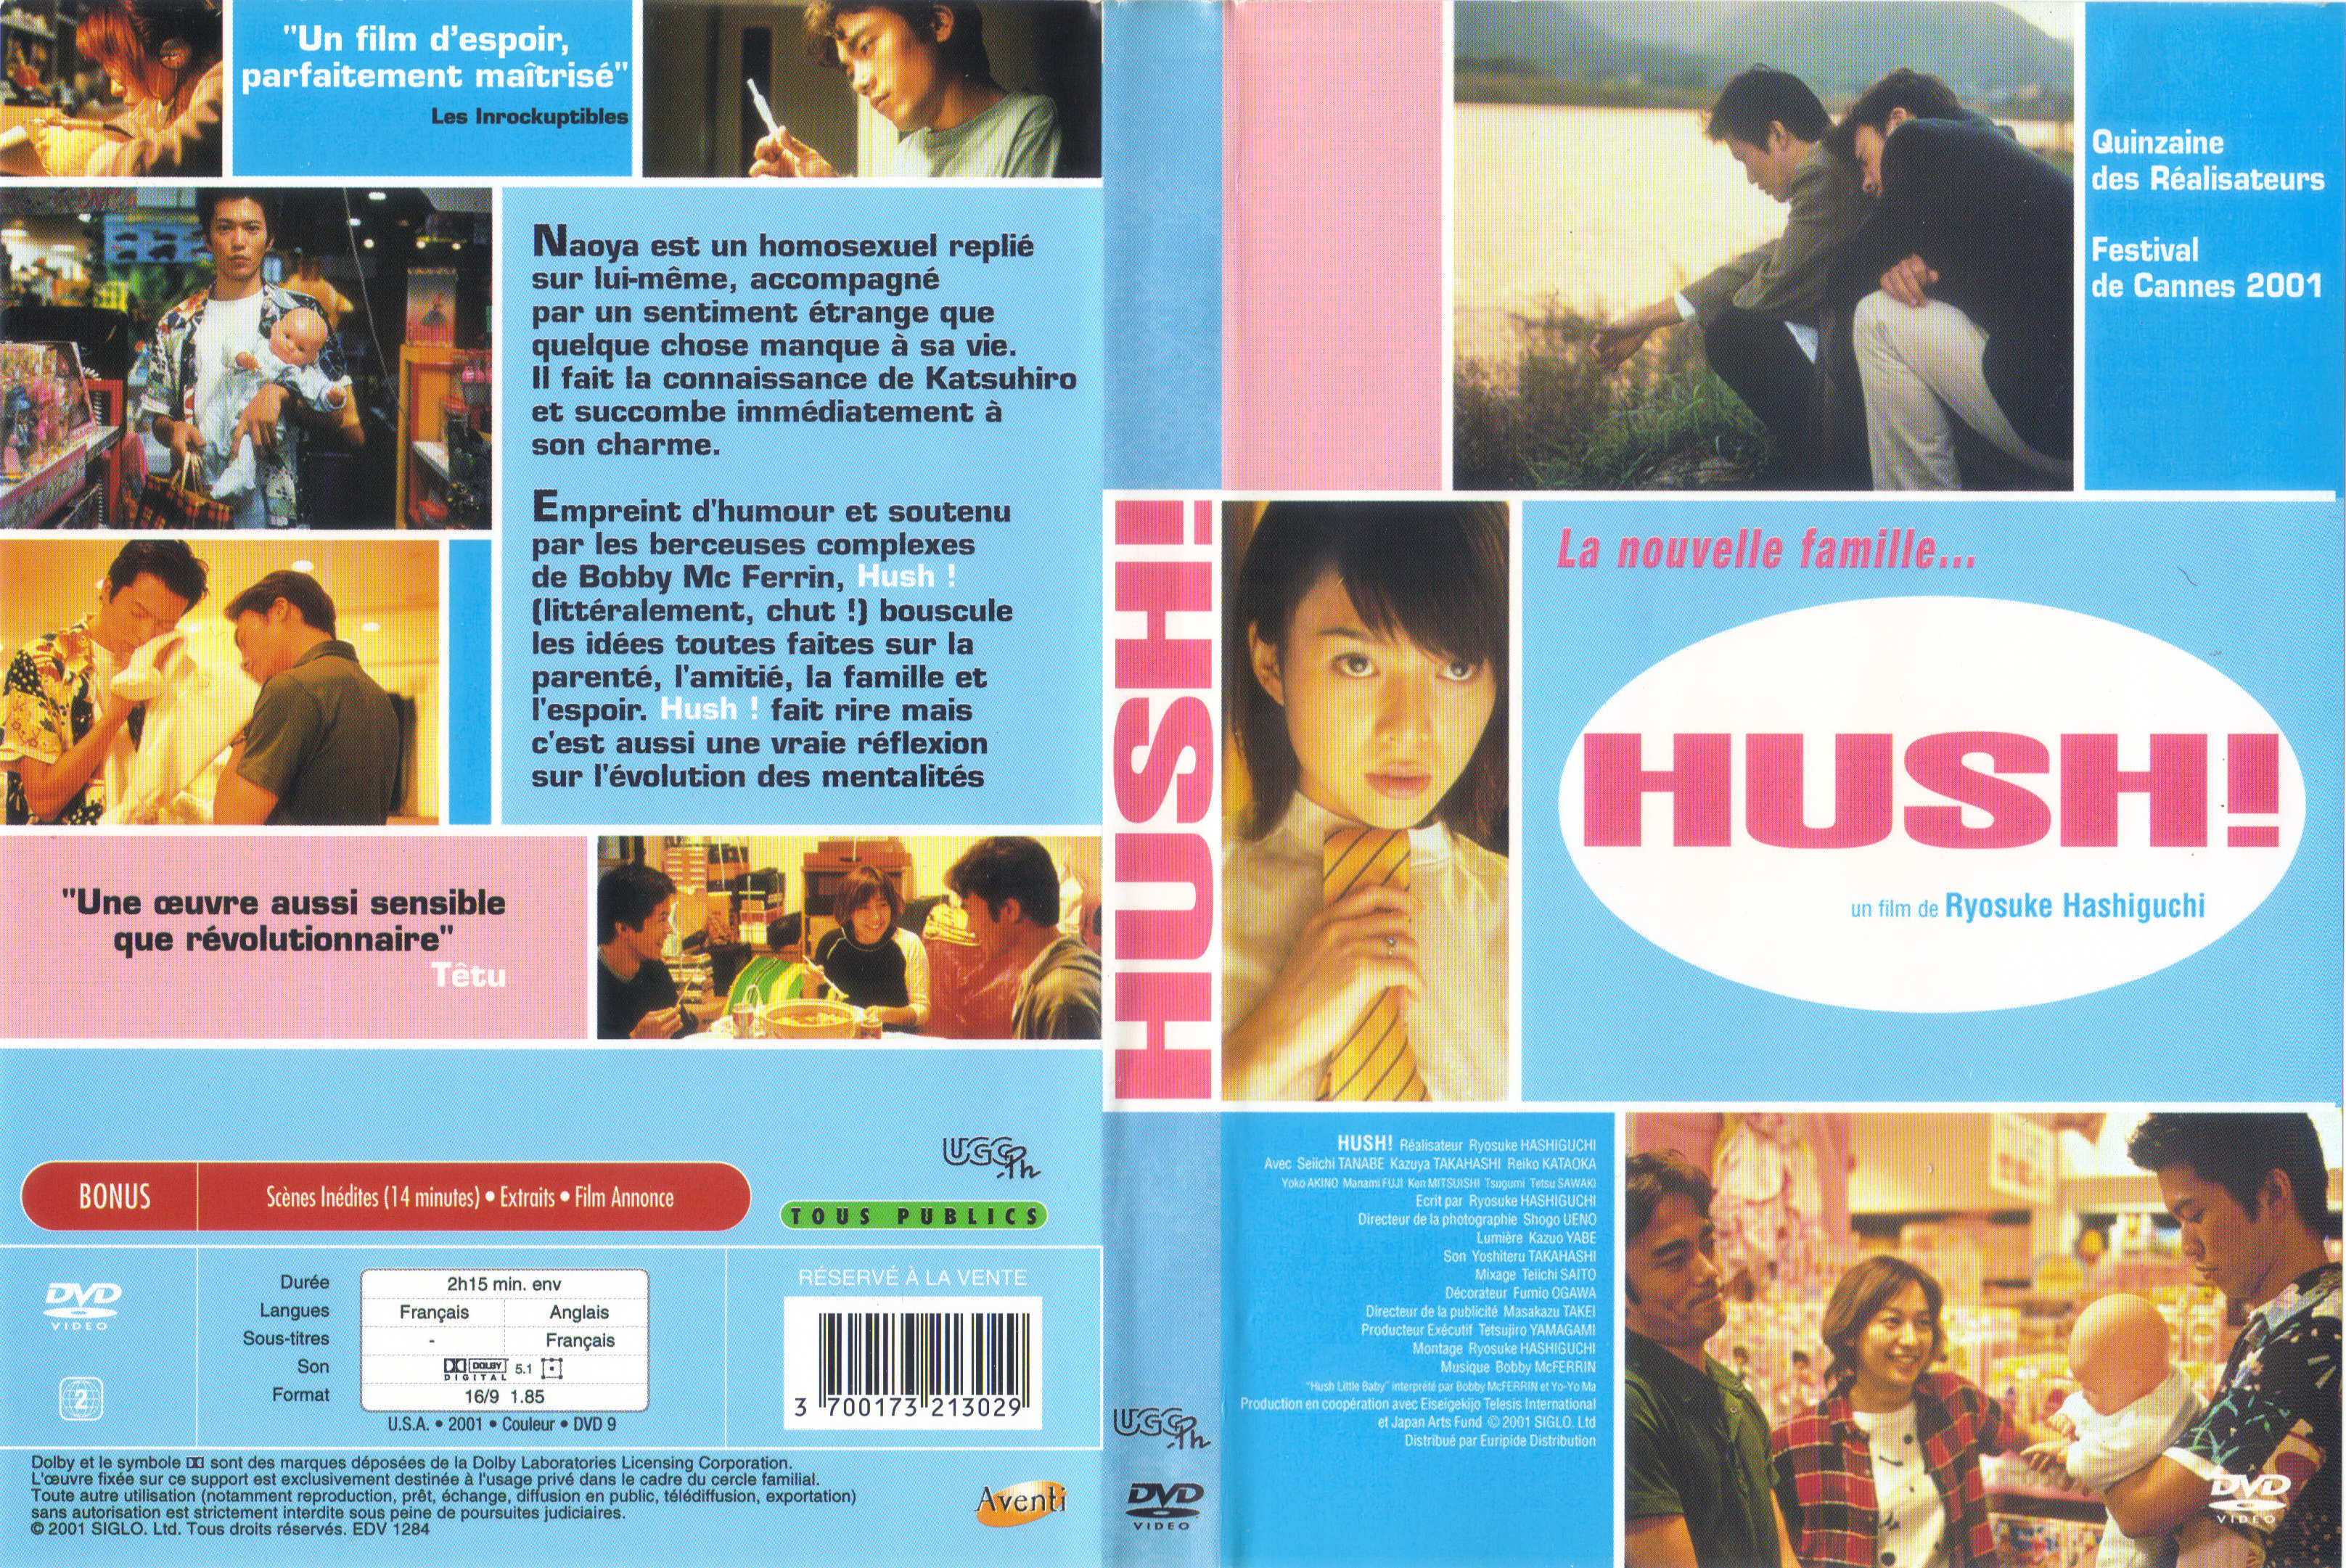 Jaquette DVD Hush v2